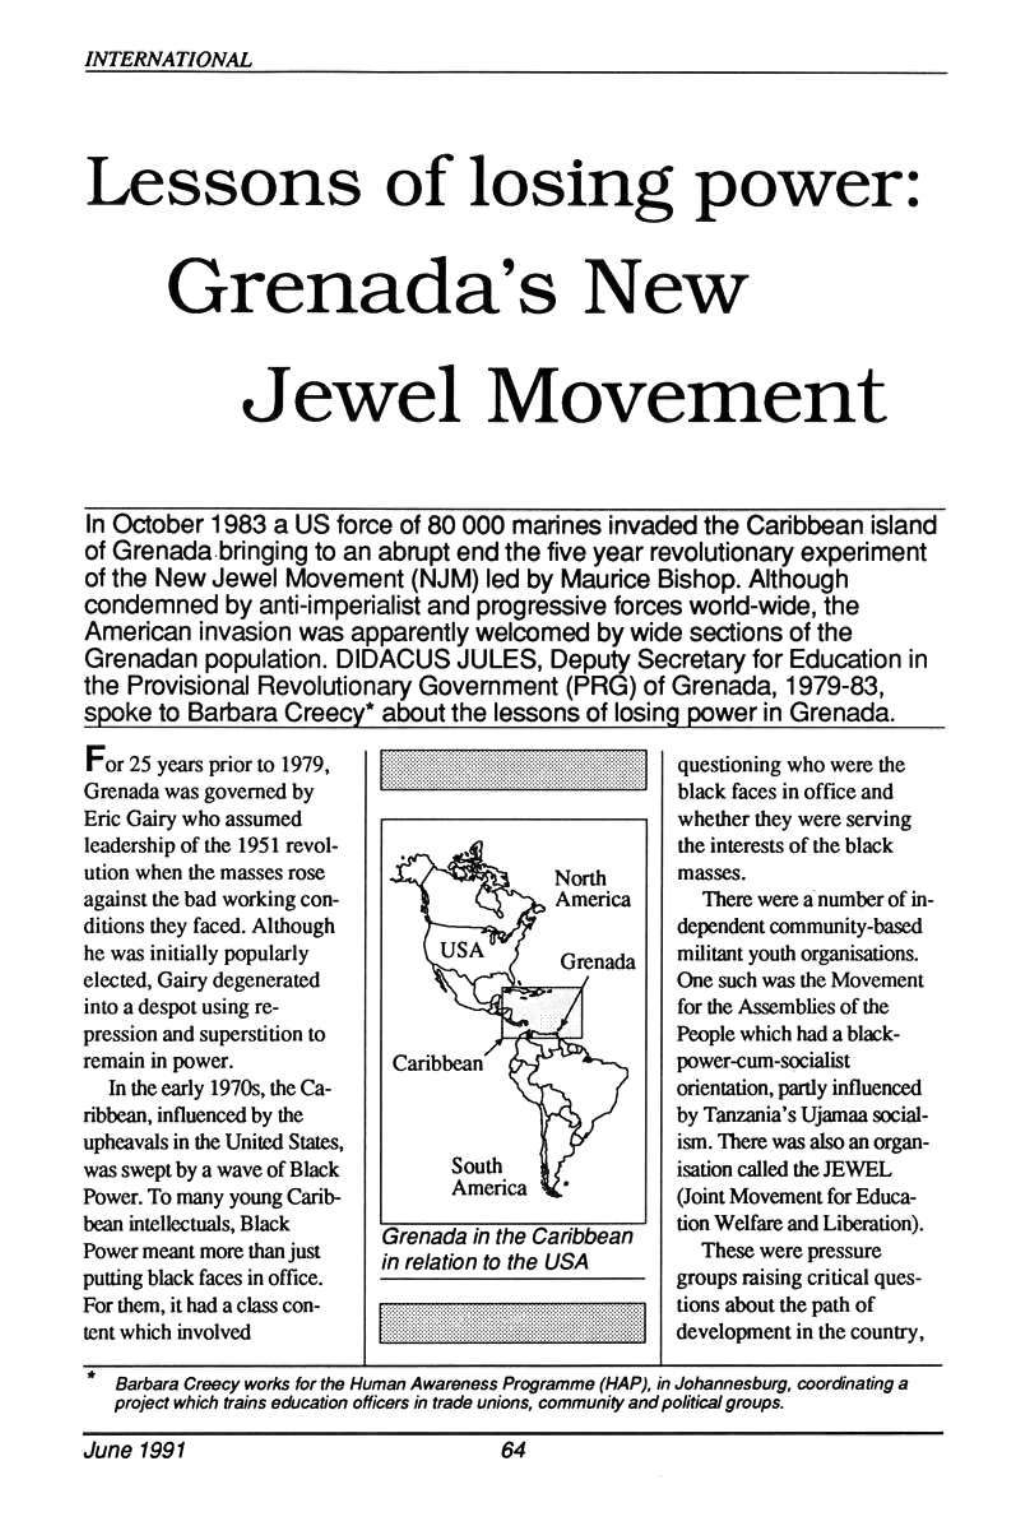 Grenada's New Jewel Movement